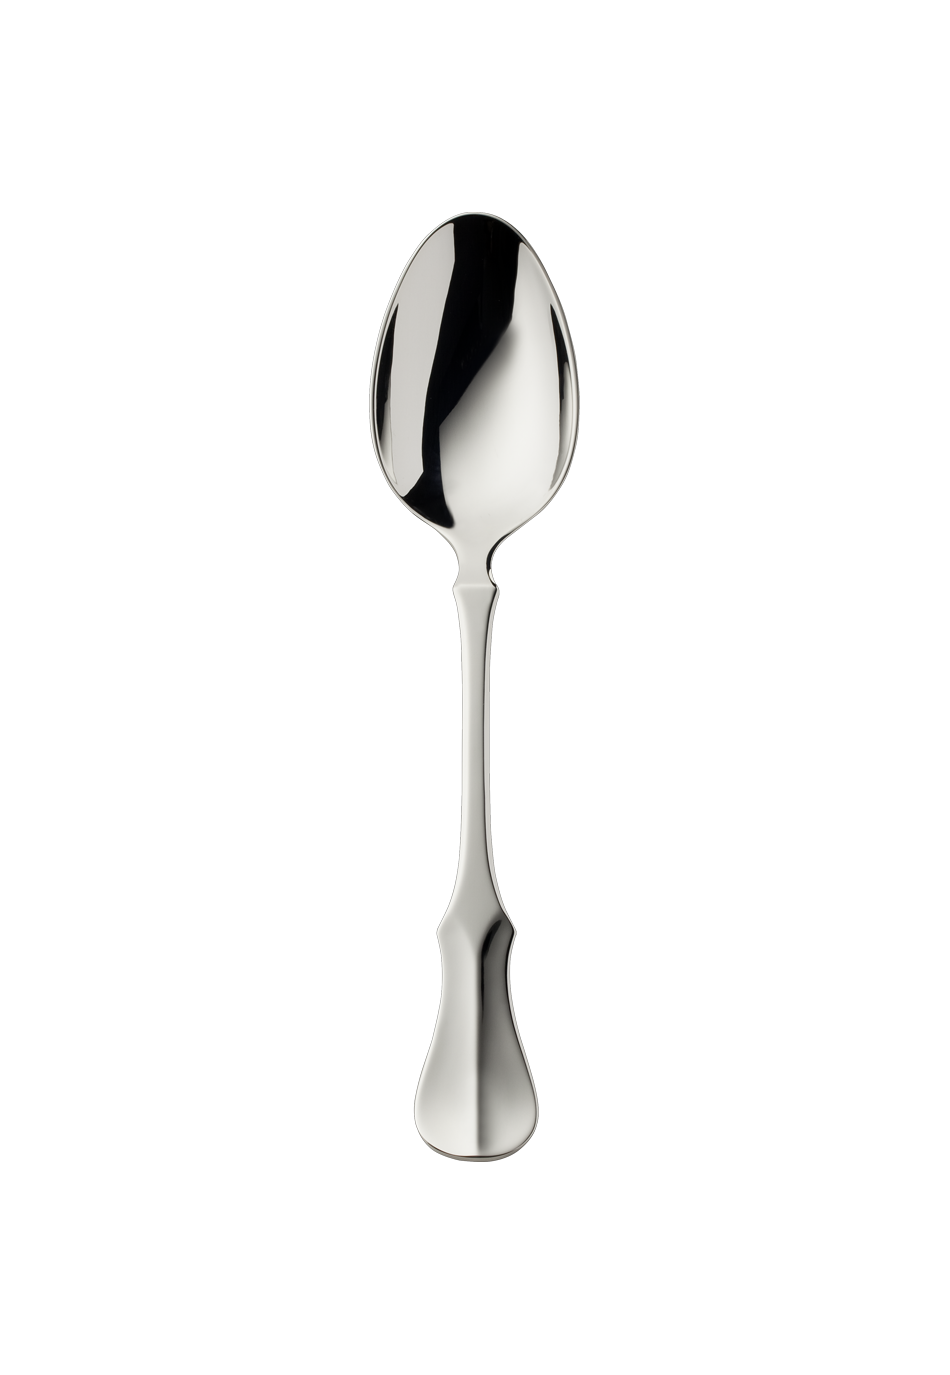 Alt-Kopenhagen Menu Spoon (150g massive silverplated)